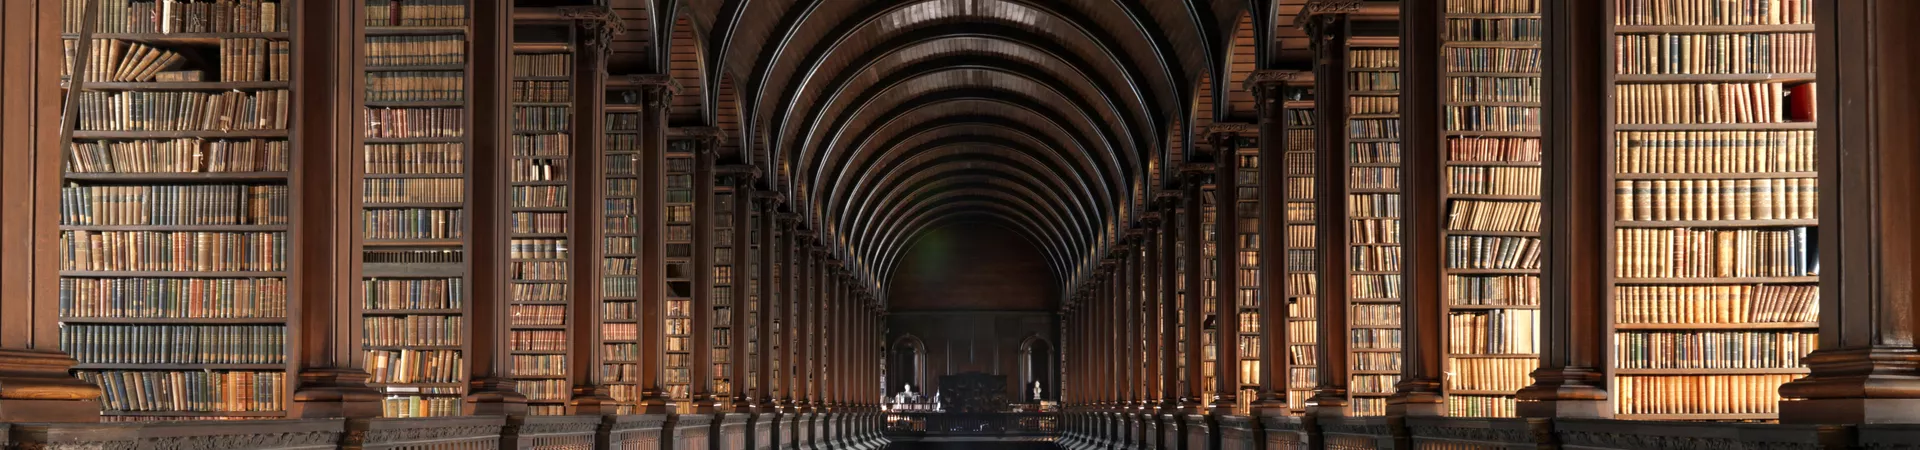 Trinity College Long Room Library Dublin Ireland